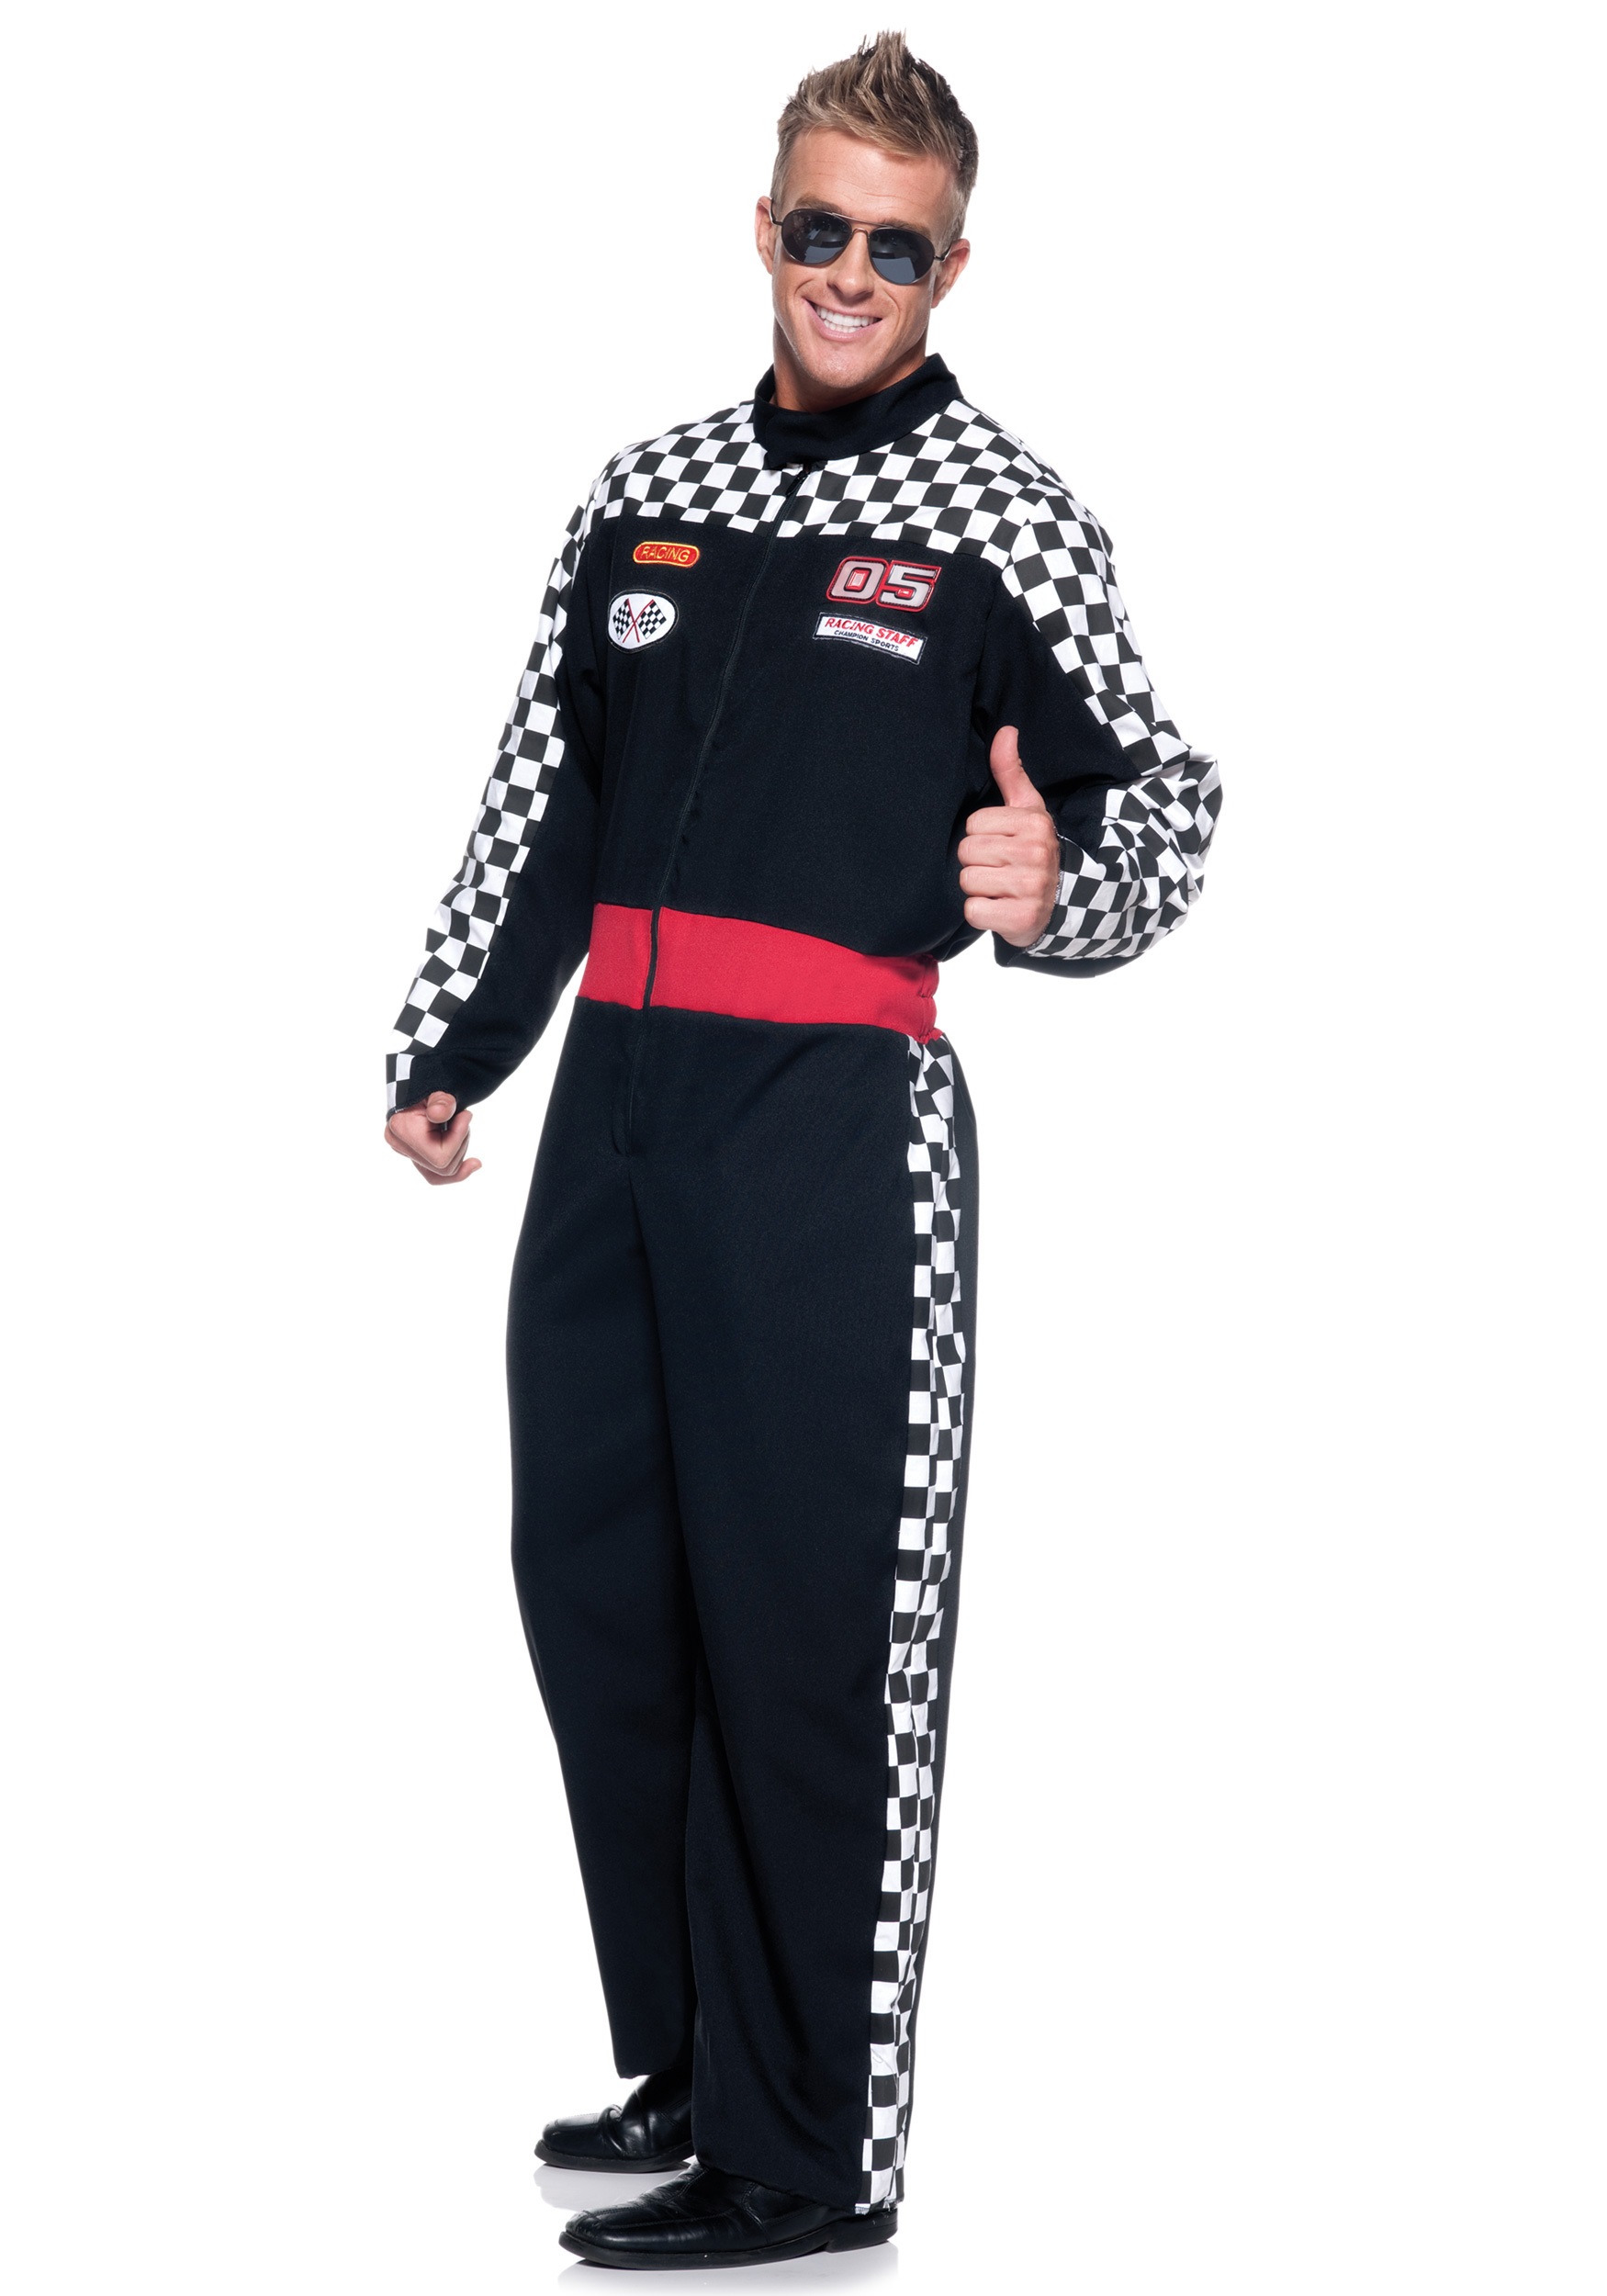 NASCAR Pants for sale | eBay